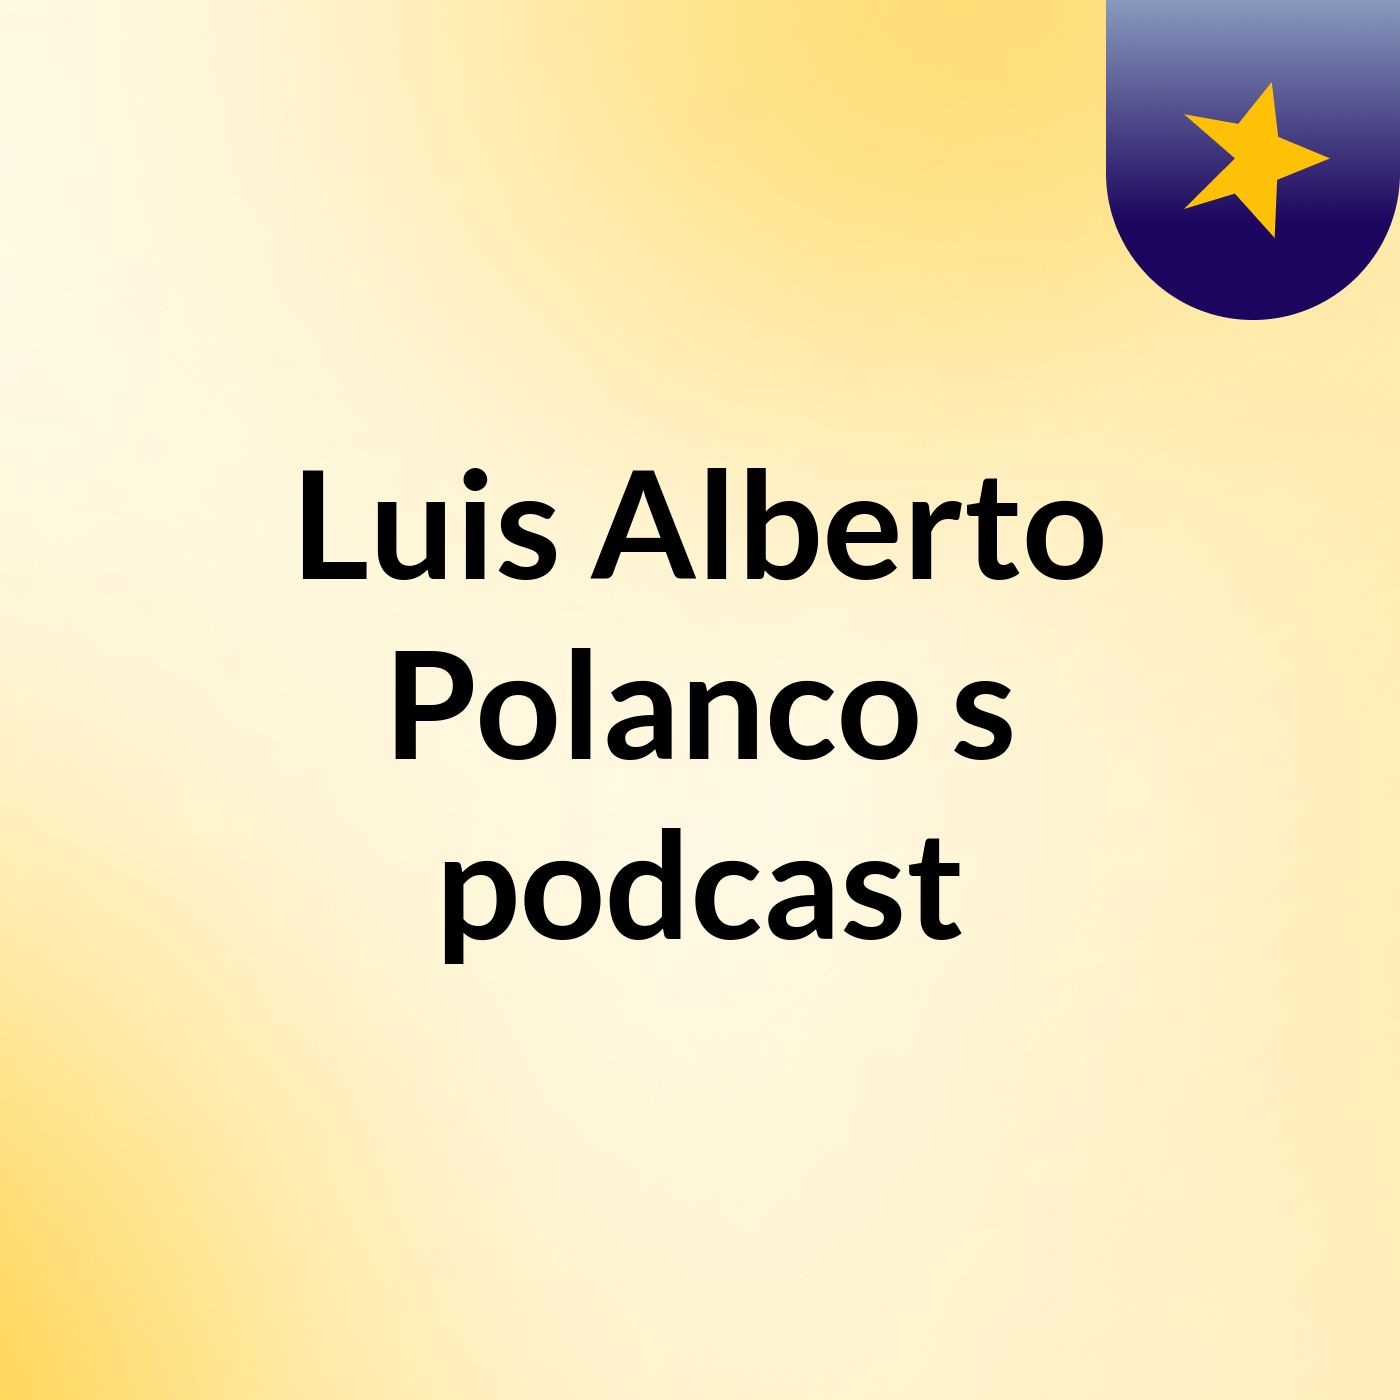 Luis Alberto Polanco's podcast